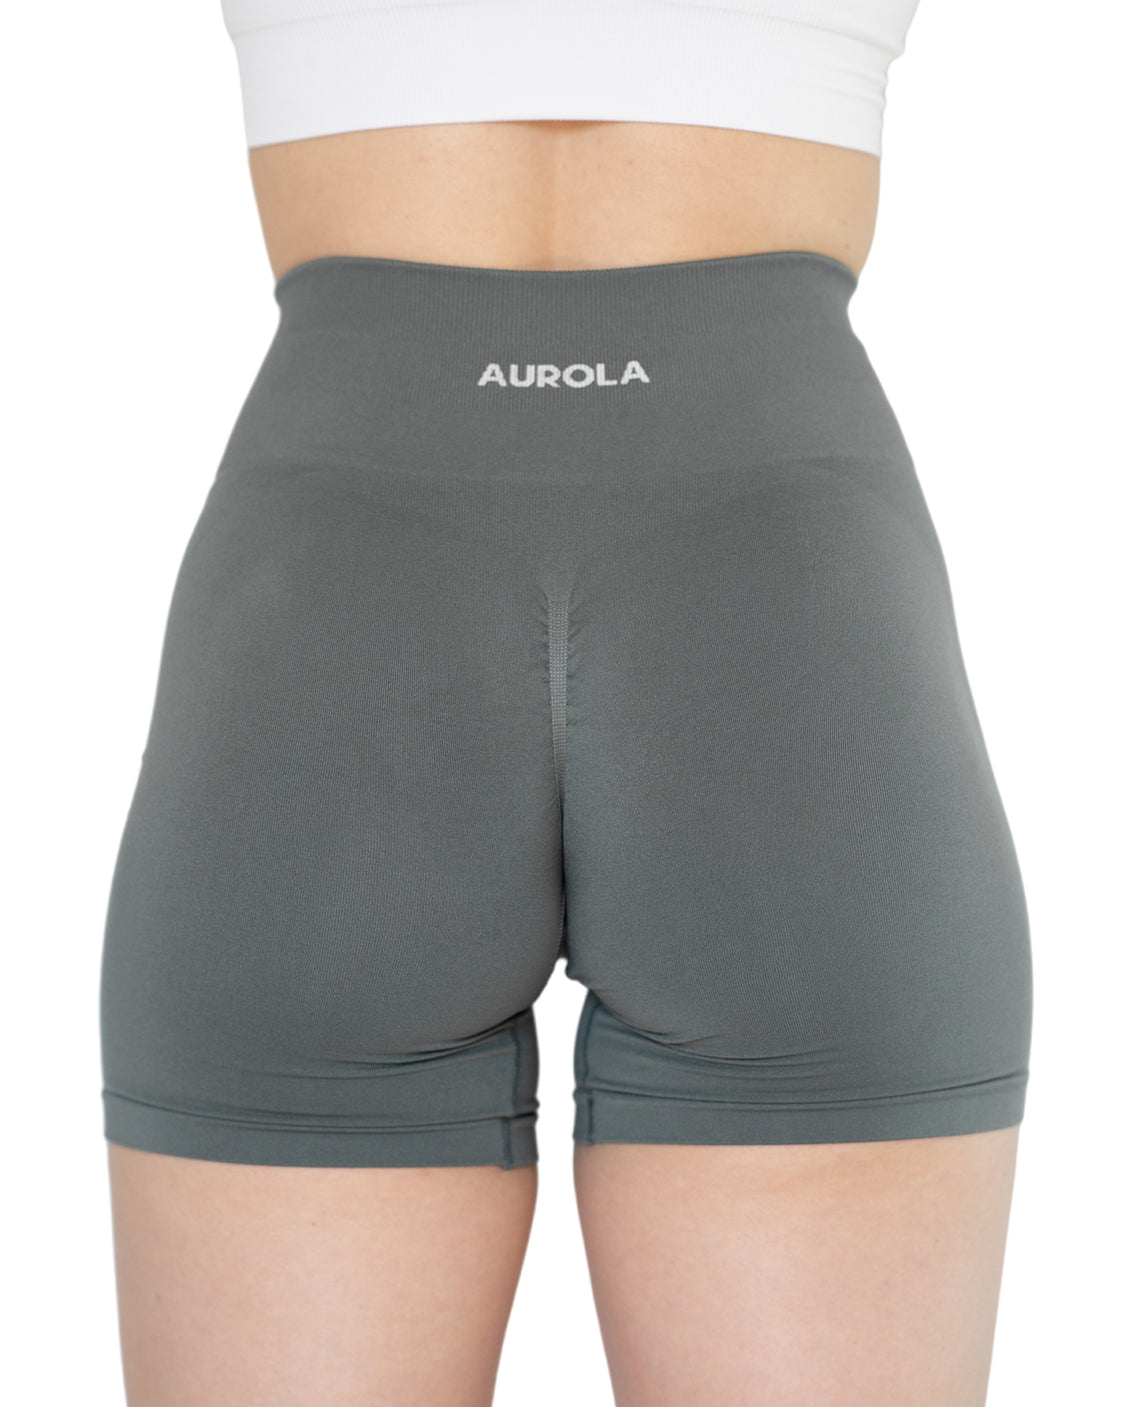  AUROLA Dream Collection Workout Shorts For Women